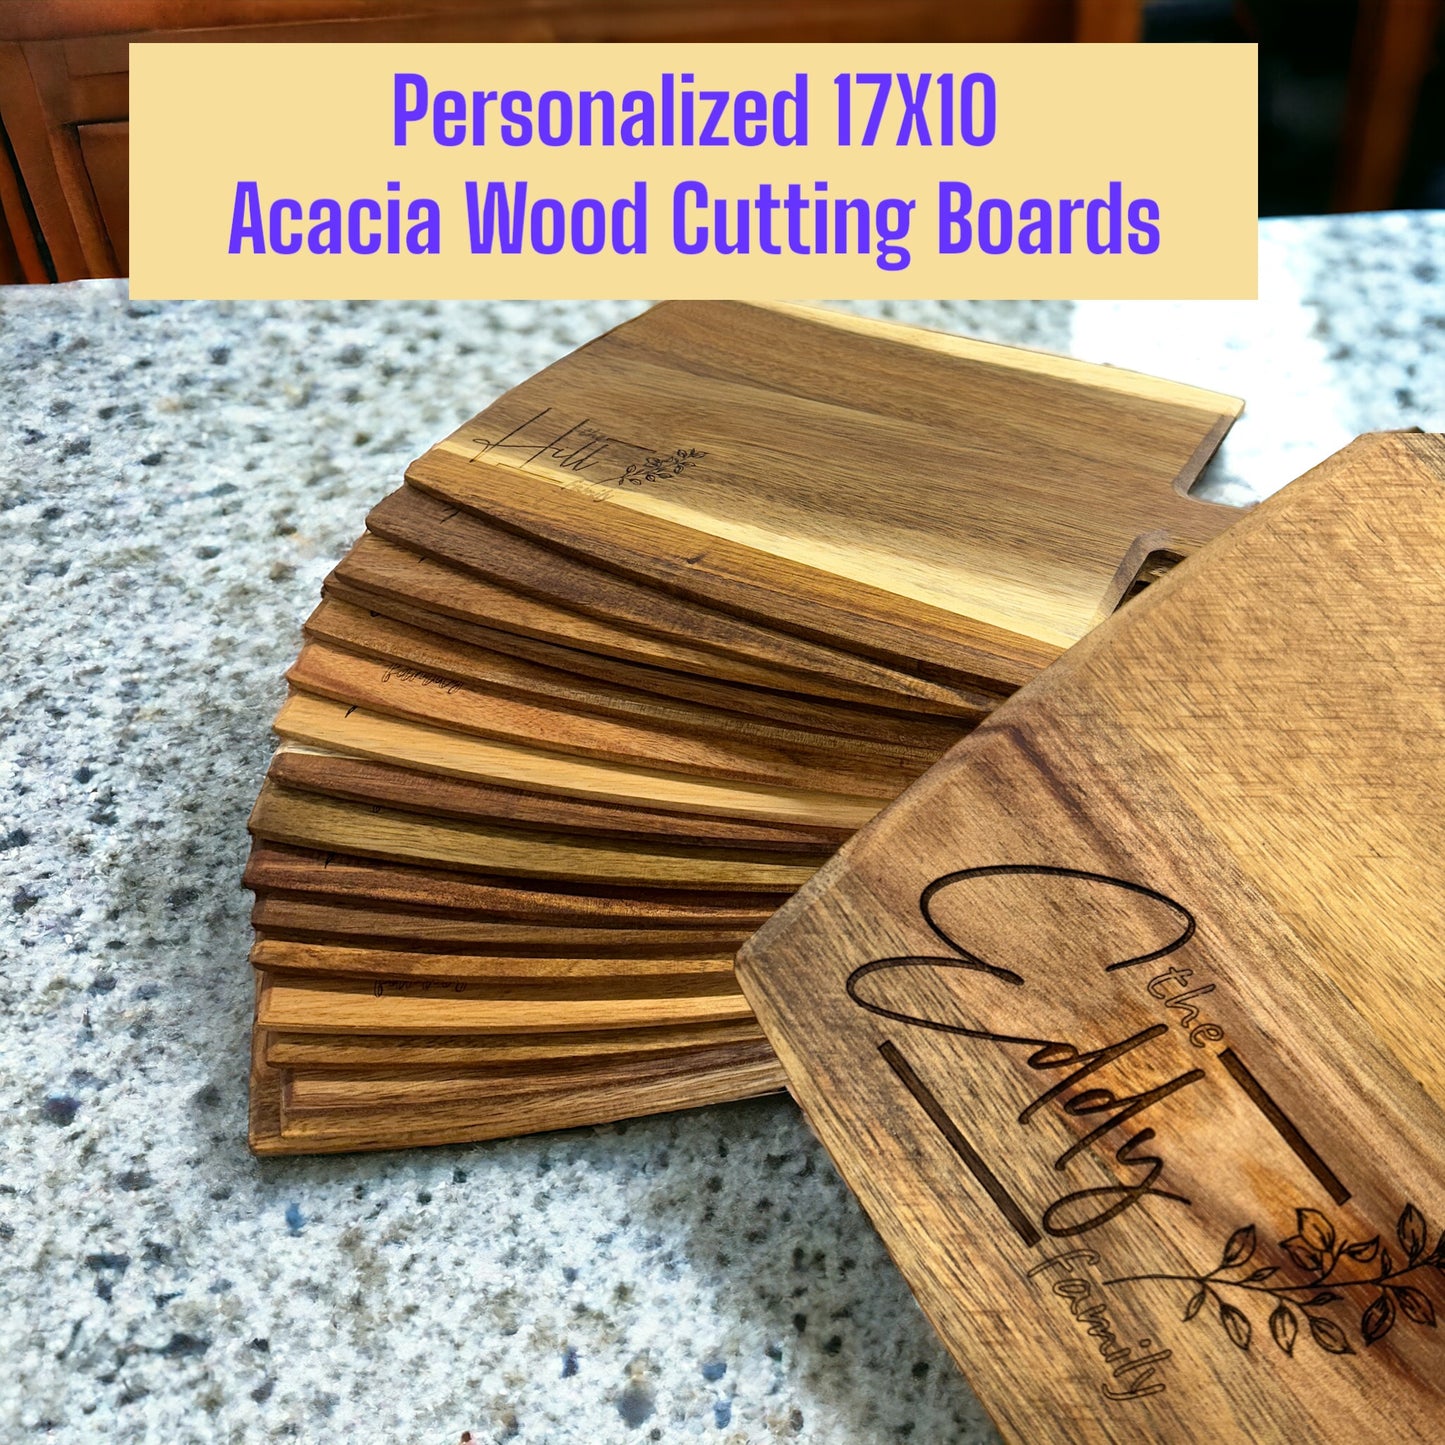 Acacia wood cutting board 17X10 - Laser engraved